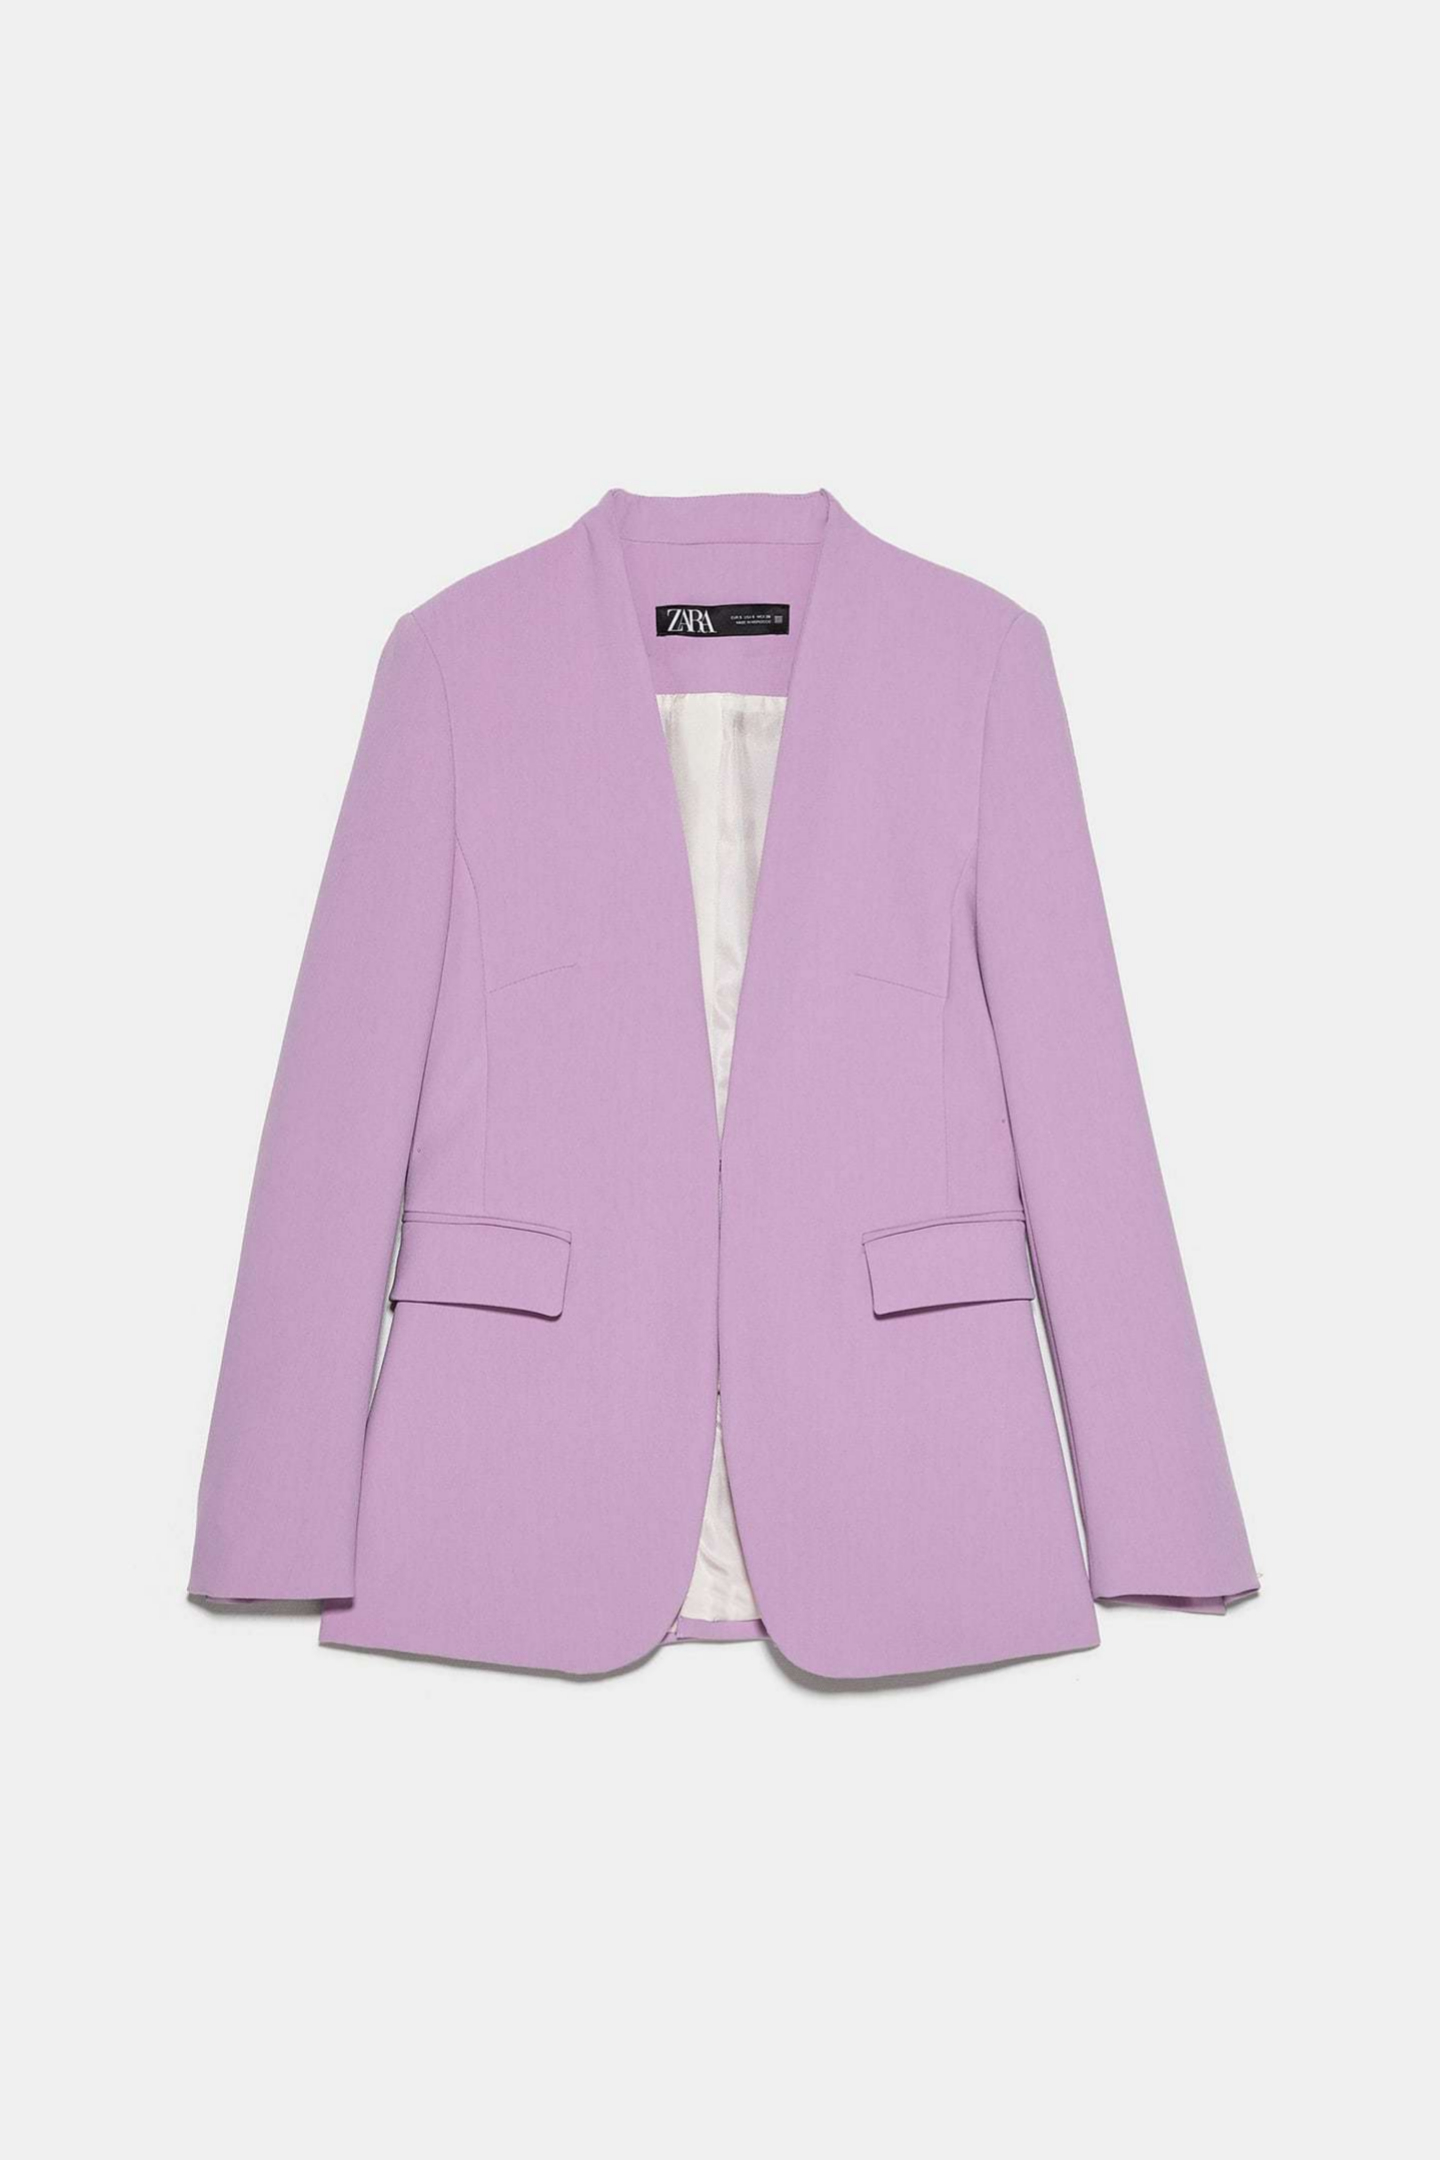 Blazer sin solapa en color lila de Zara (39,95¤)